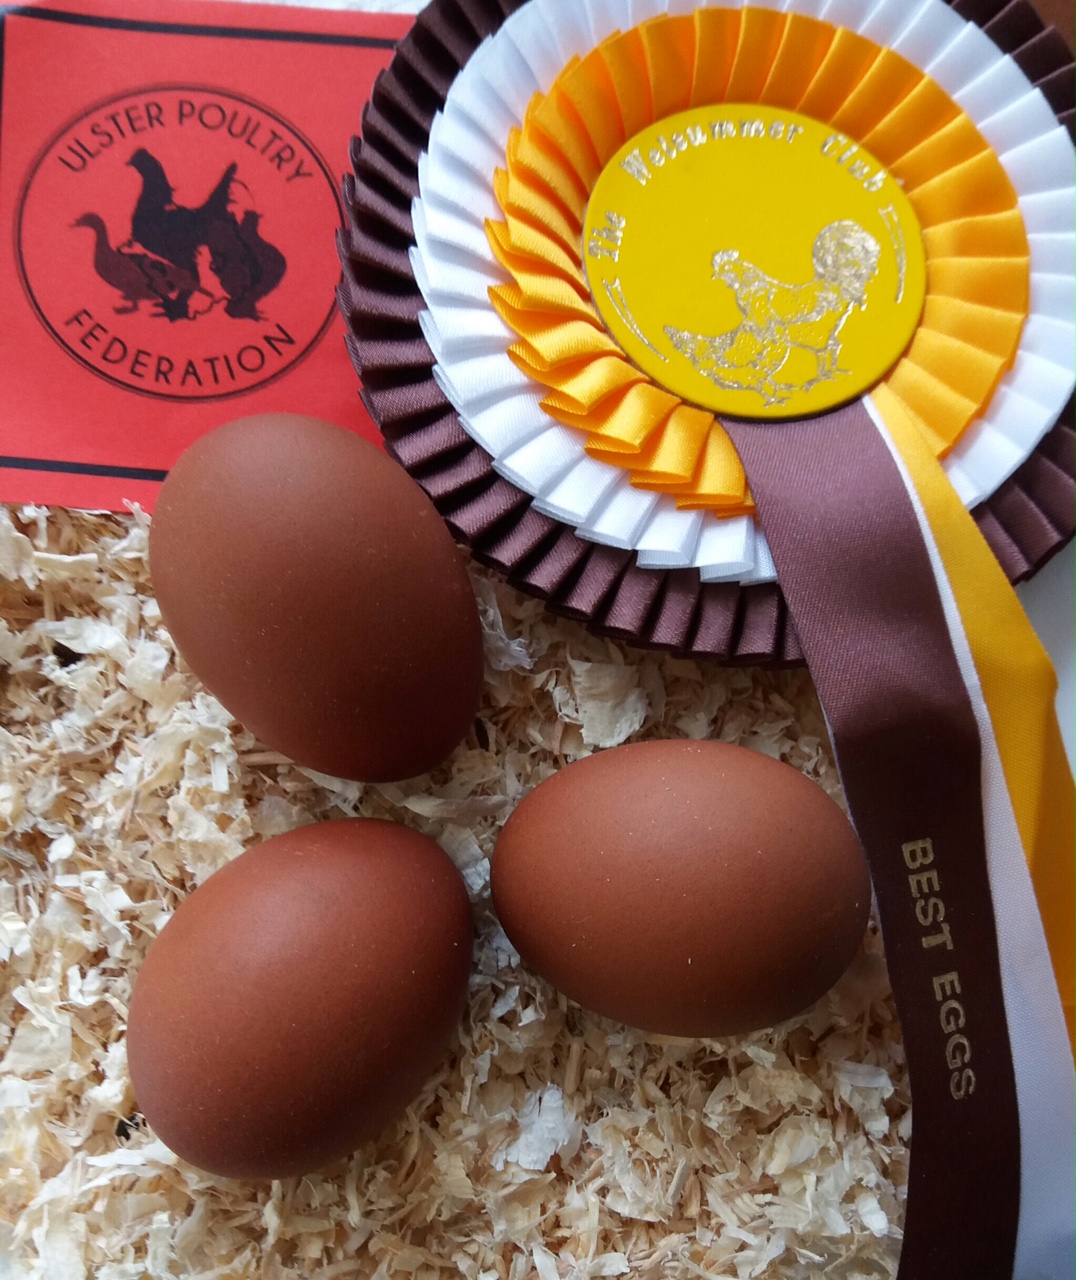 3 prize eggs